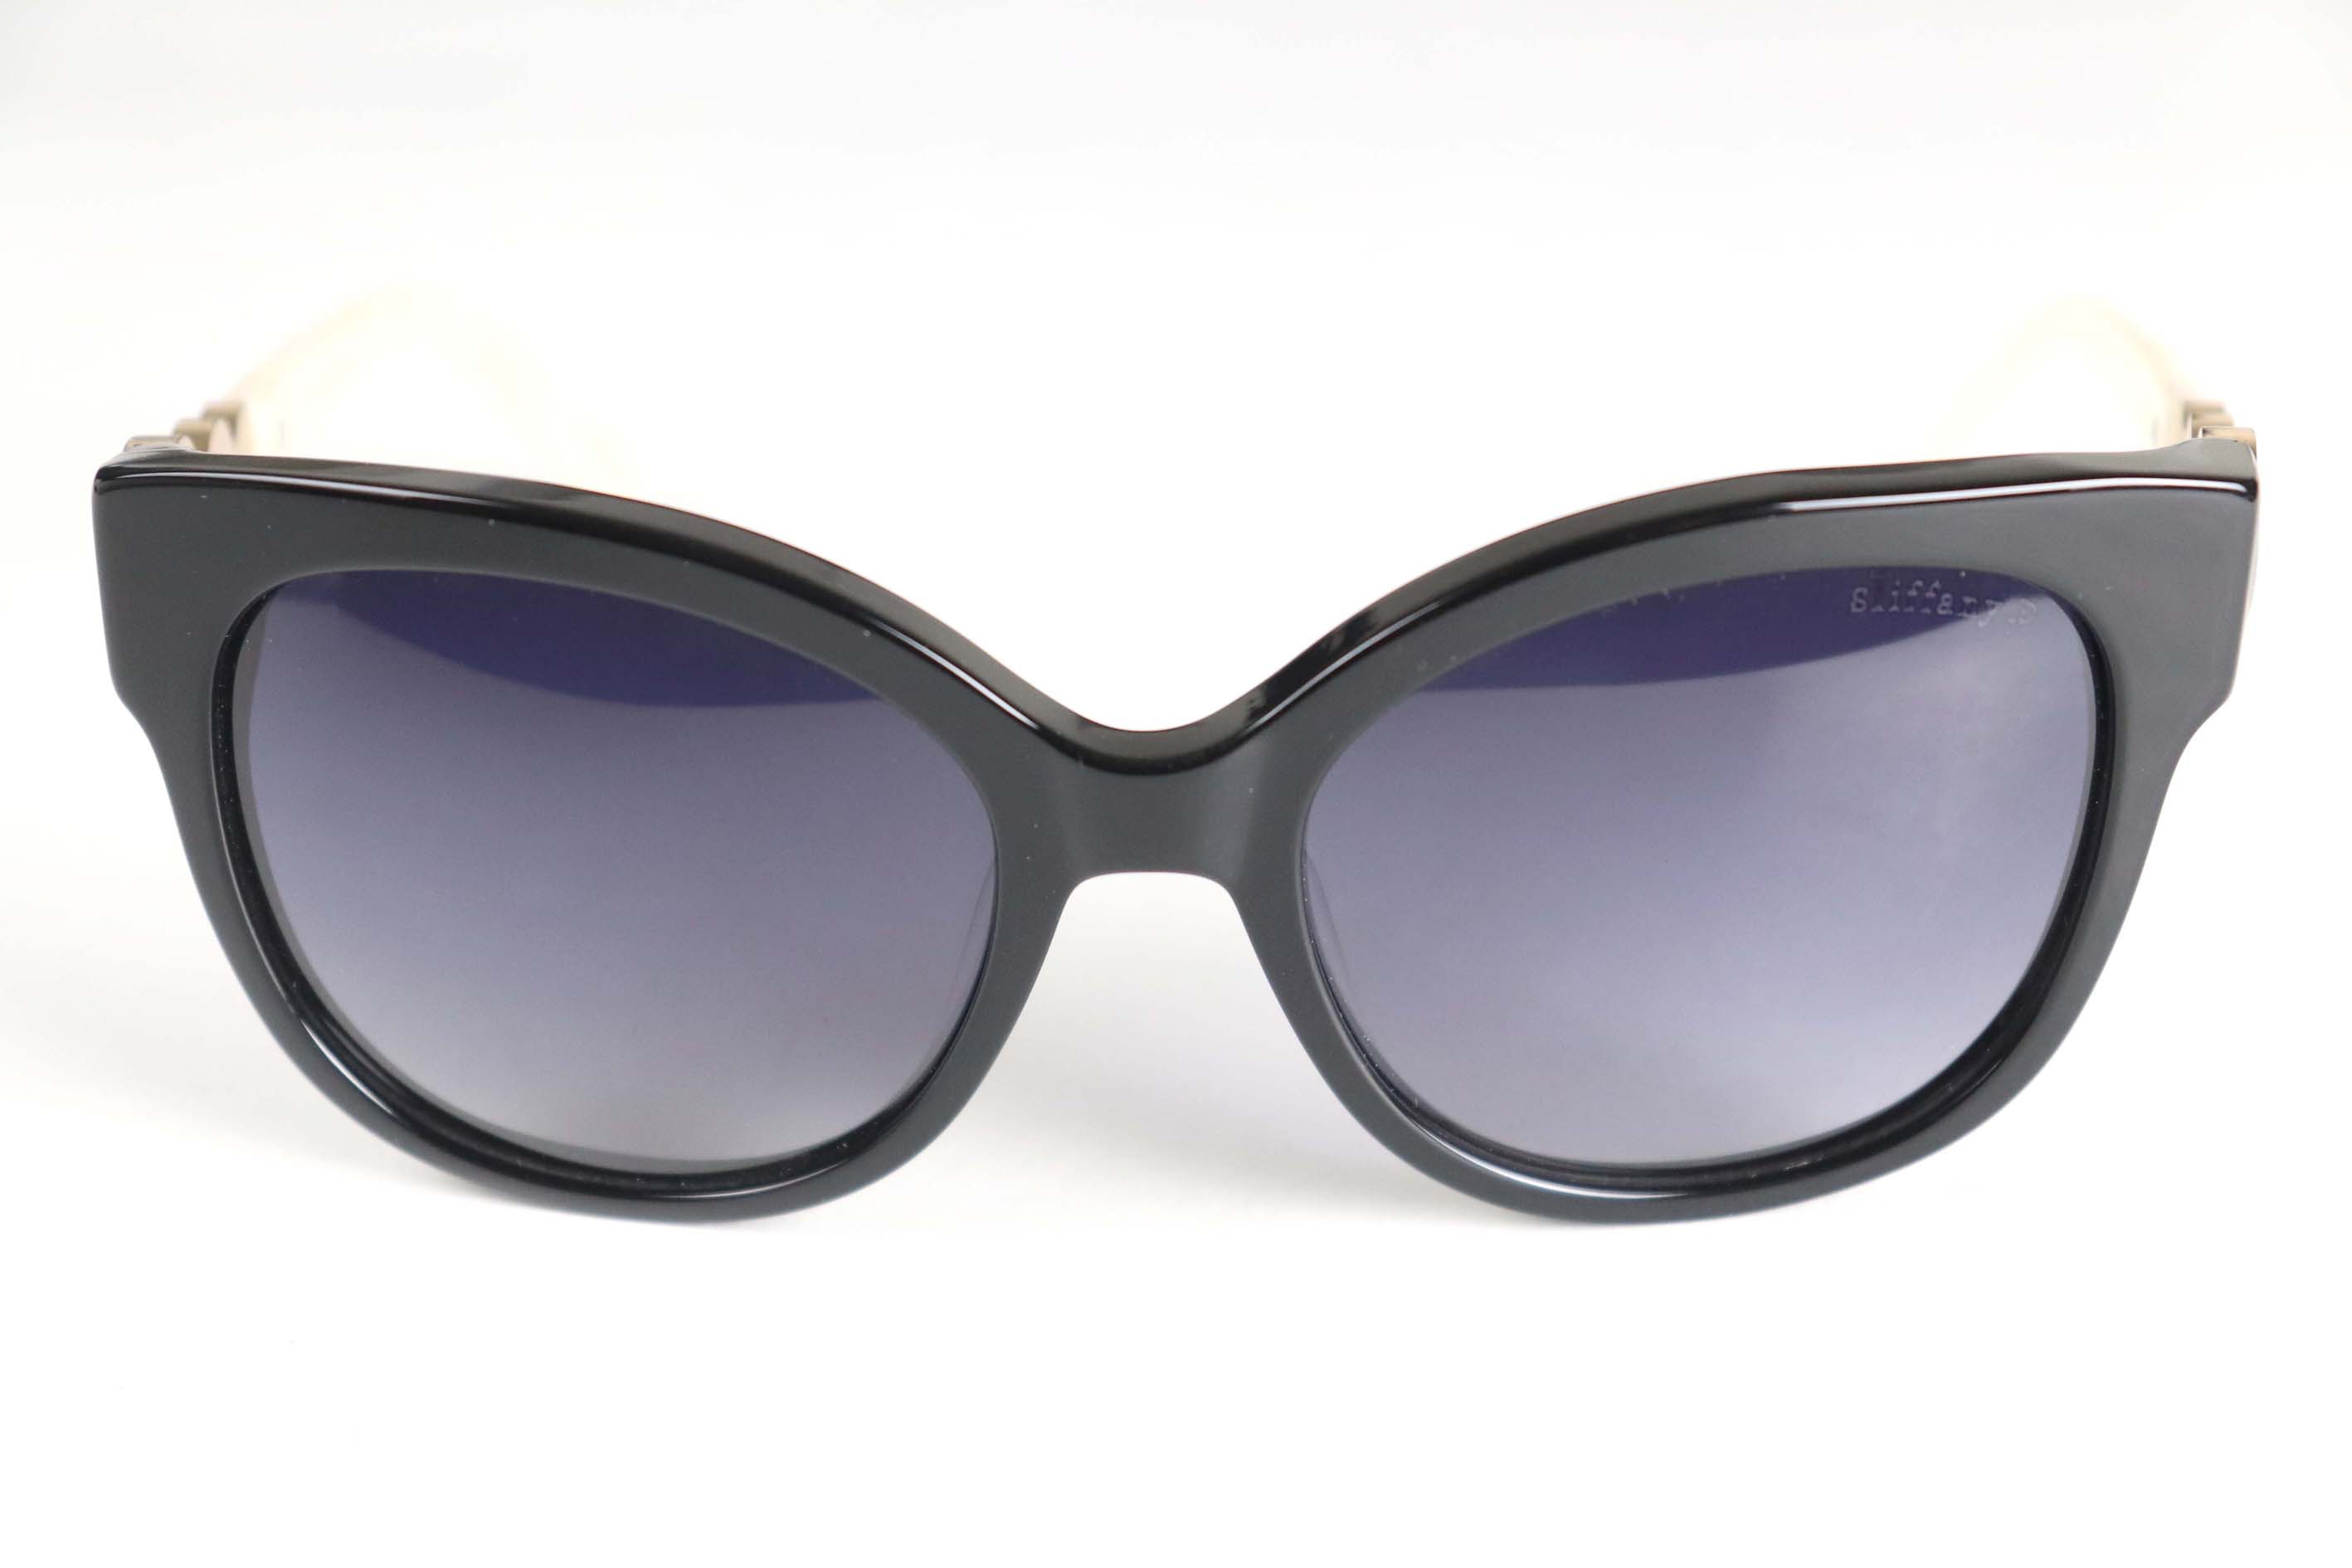 Stiffany Sunglasses-BV8205B-C6-53-18-138.